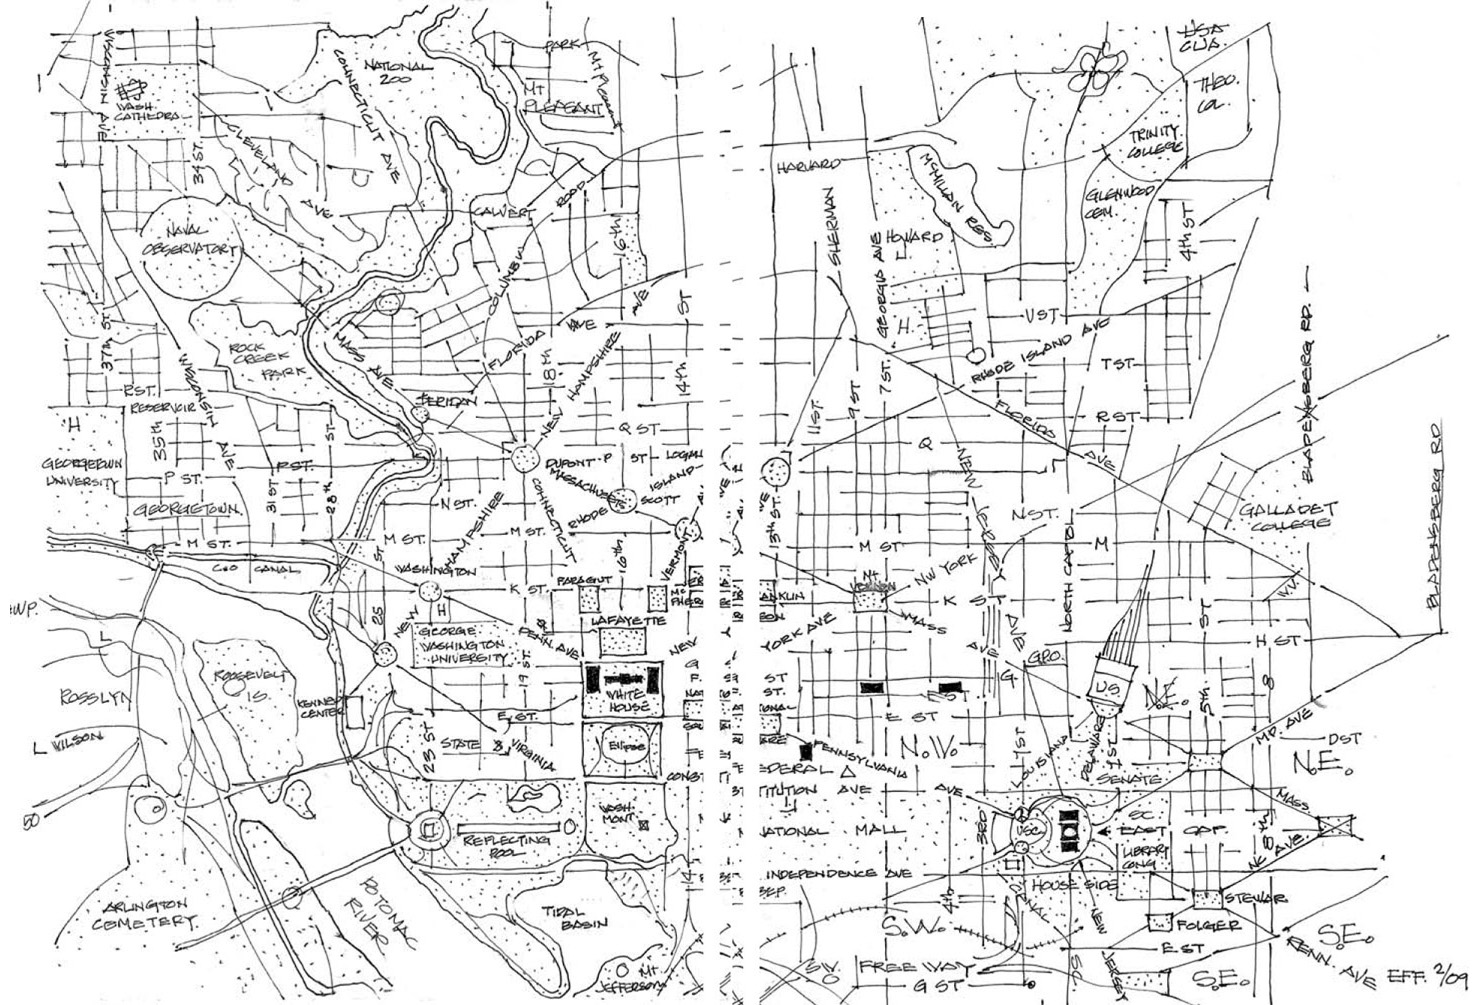 Washington DC city map By Edward F Fogle Published by The History Press - photo 2